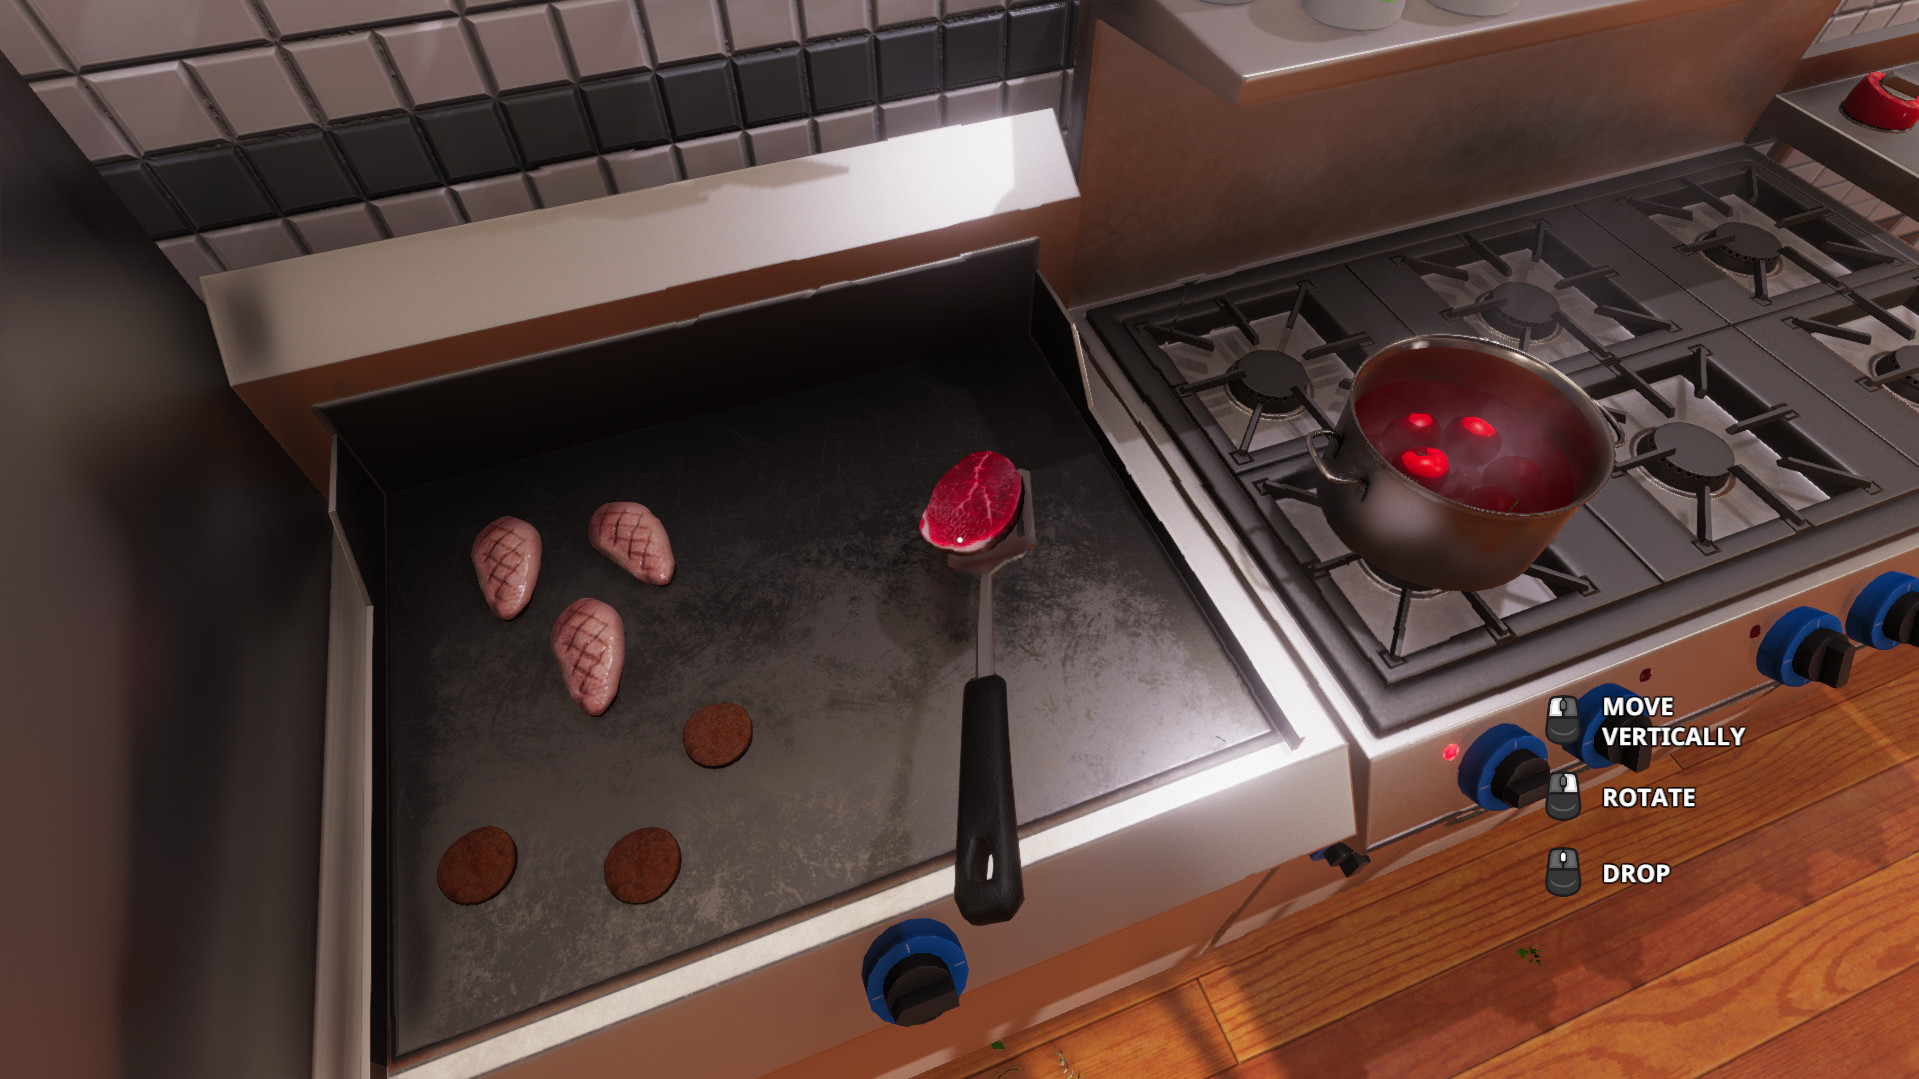 Cooking simulator free download windows 7